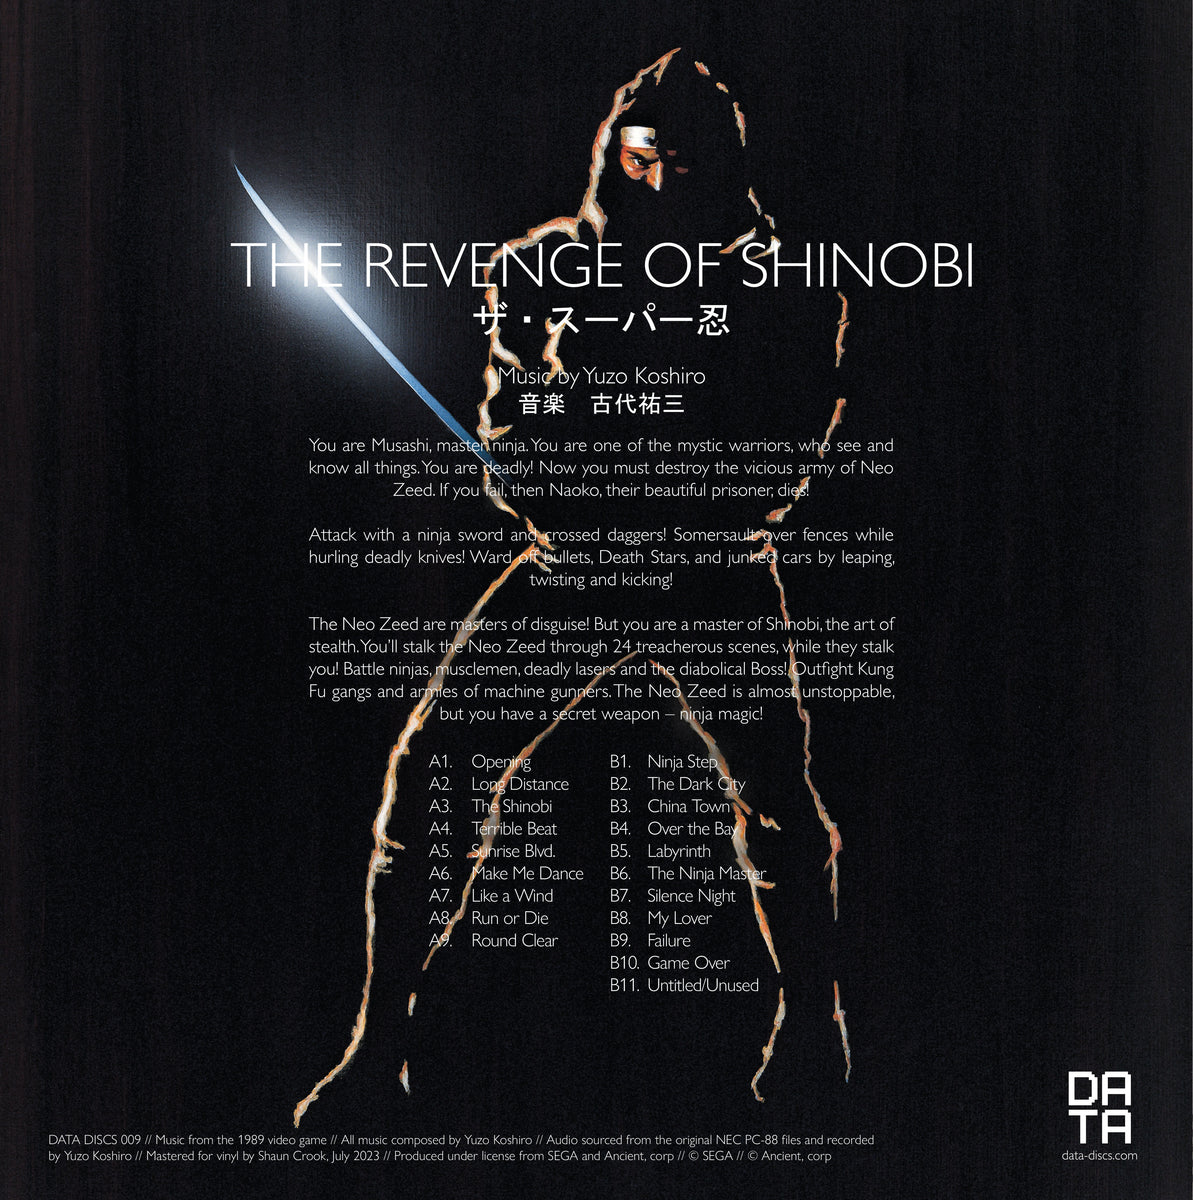 DATA009: The Revenge of Shinobi – DATA DISCS